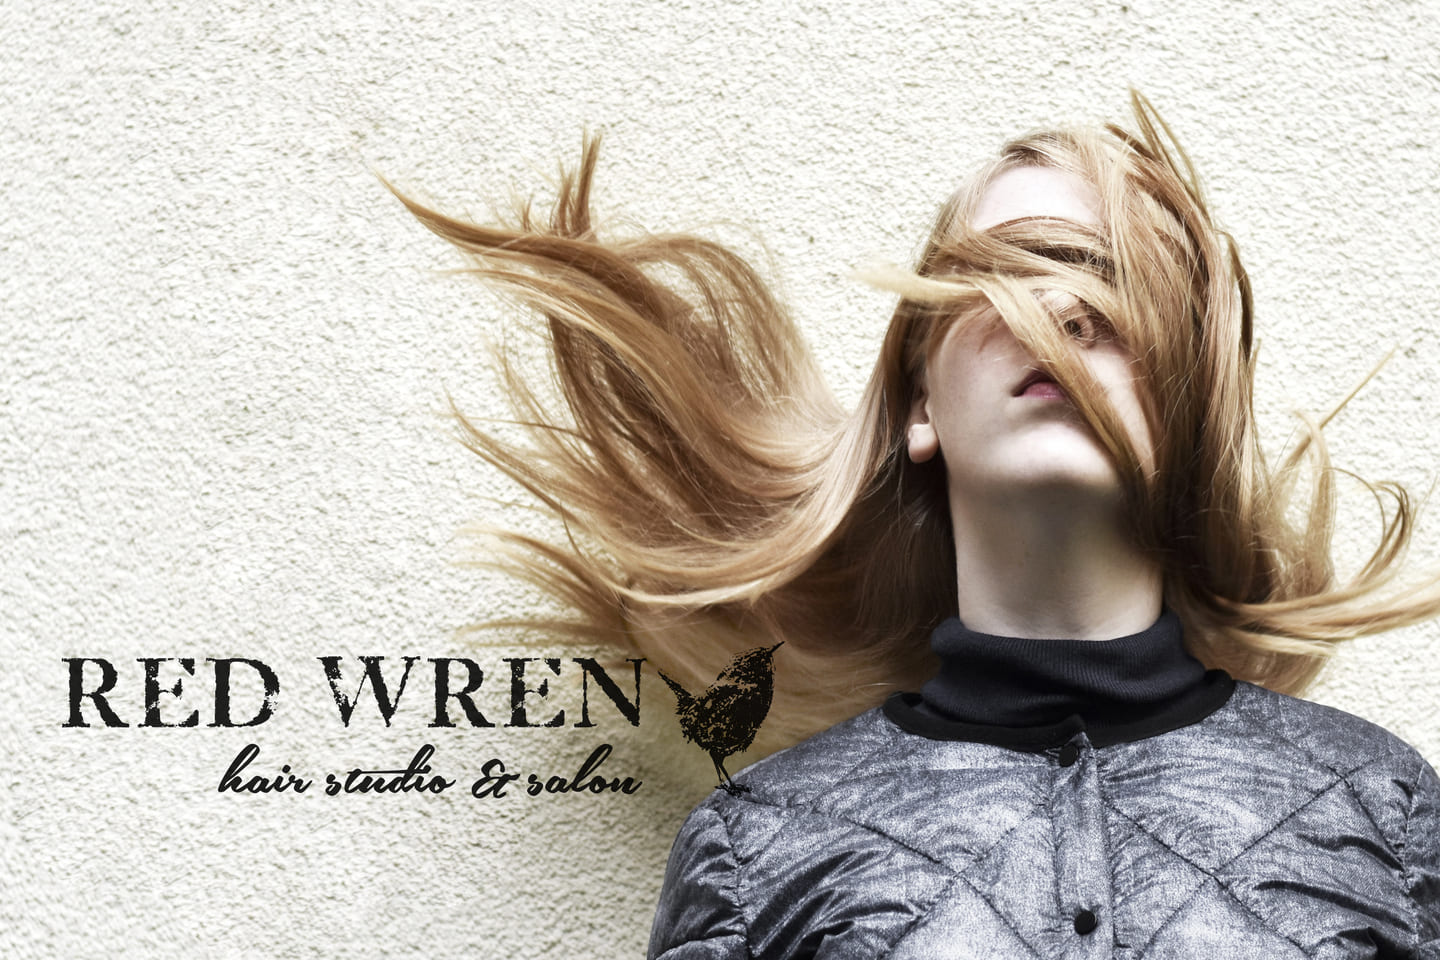 Red Wren Logo Design / Brand Identity by Rebecca Snyder. A LA MODE designs branding.